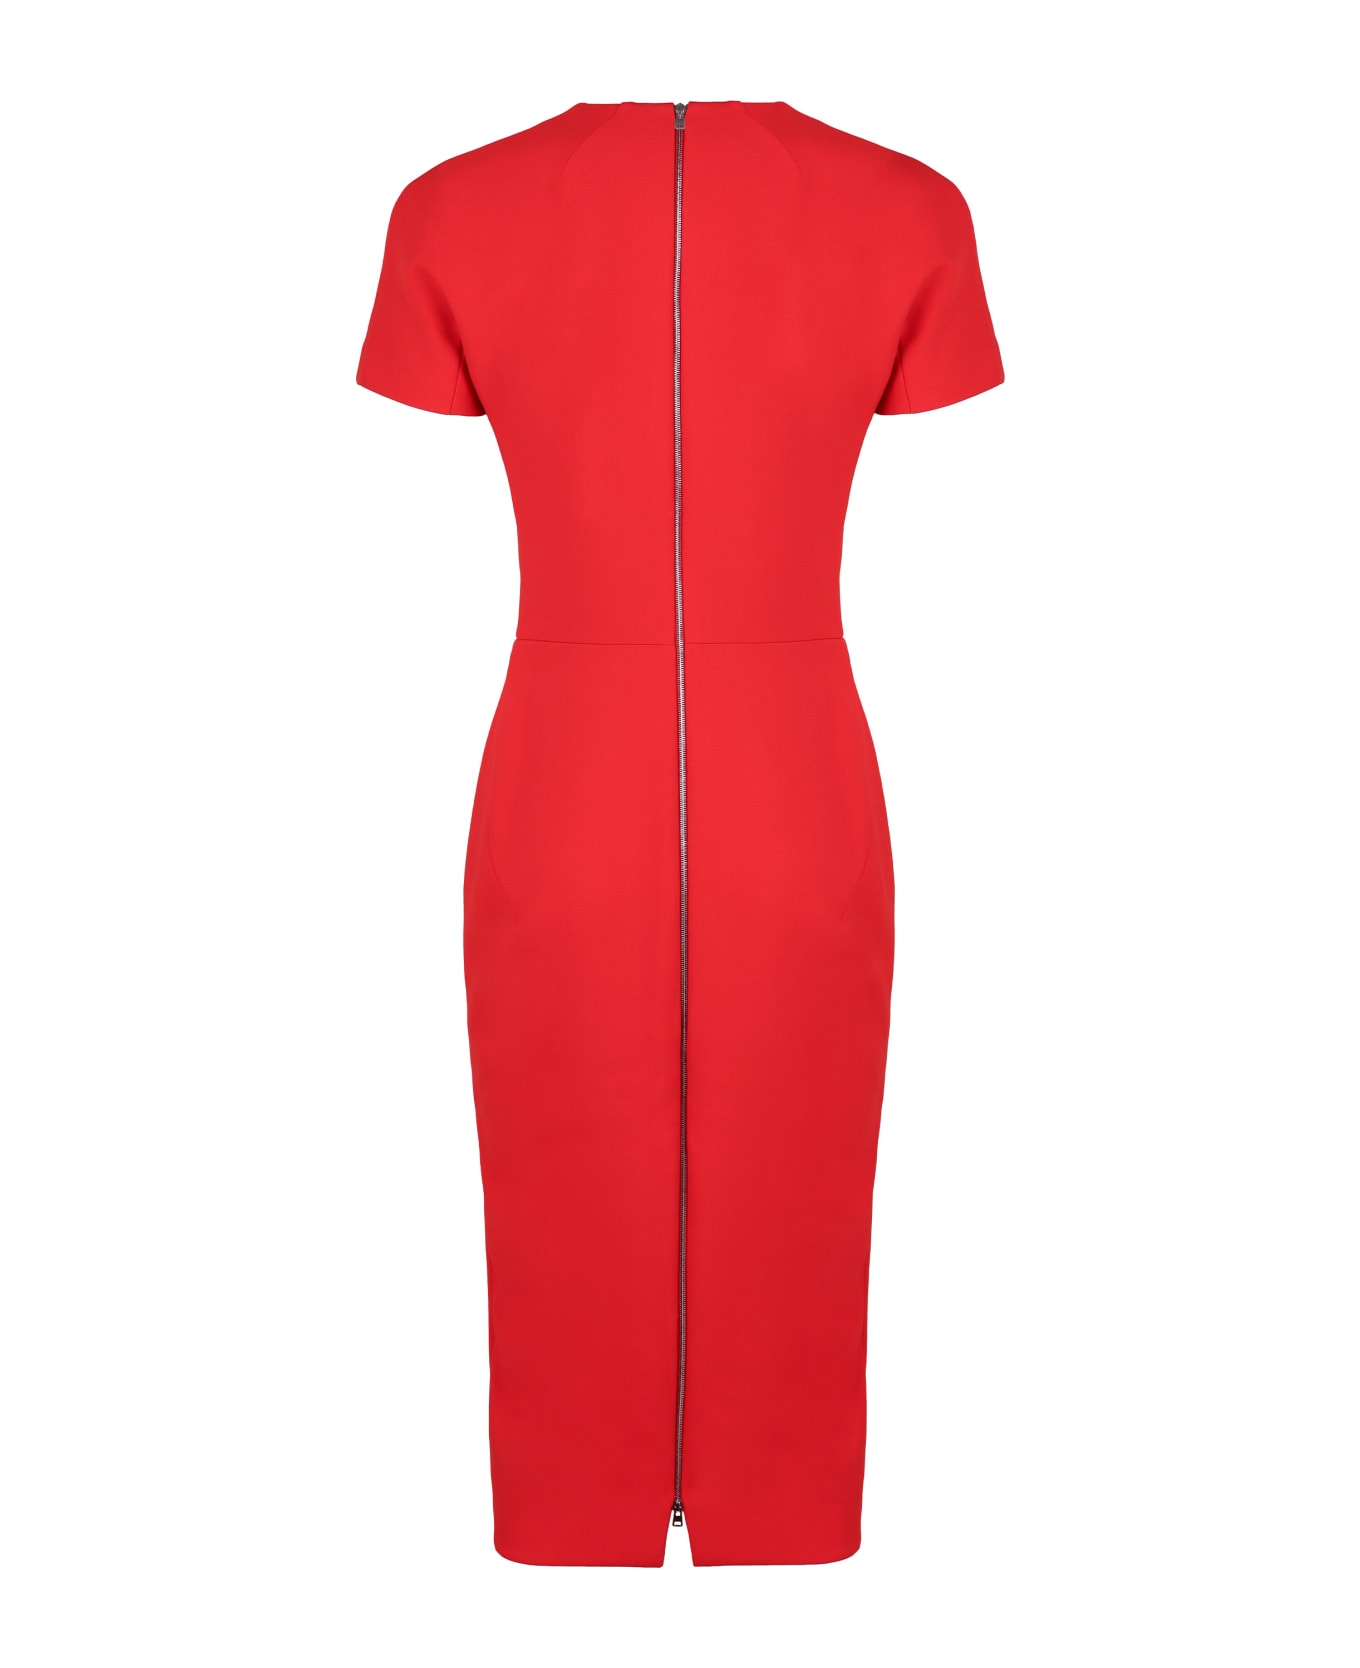 Victoria Beckham Sheath Dress - red